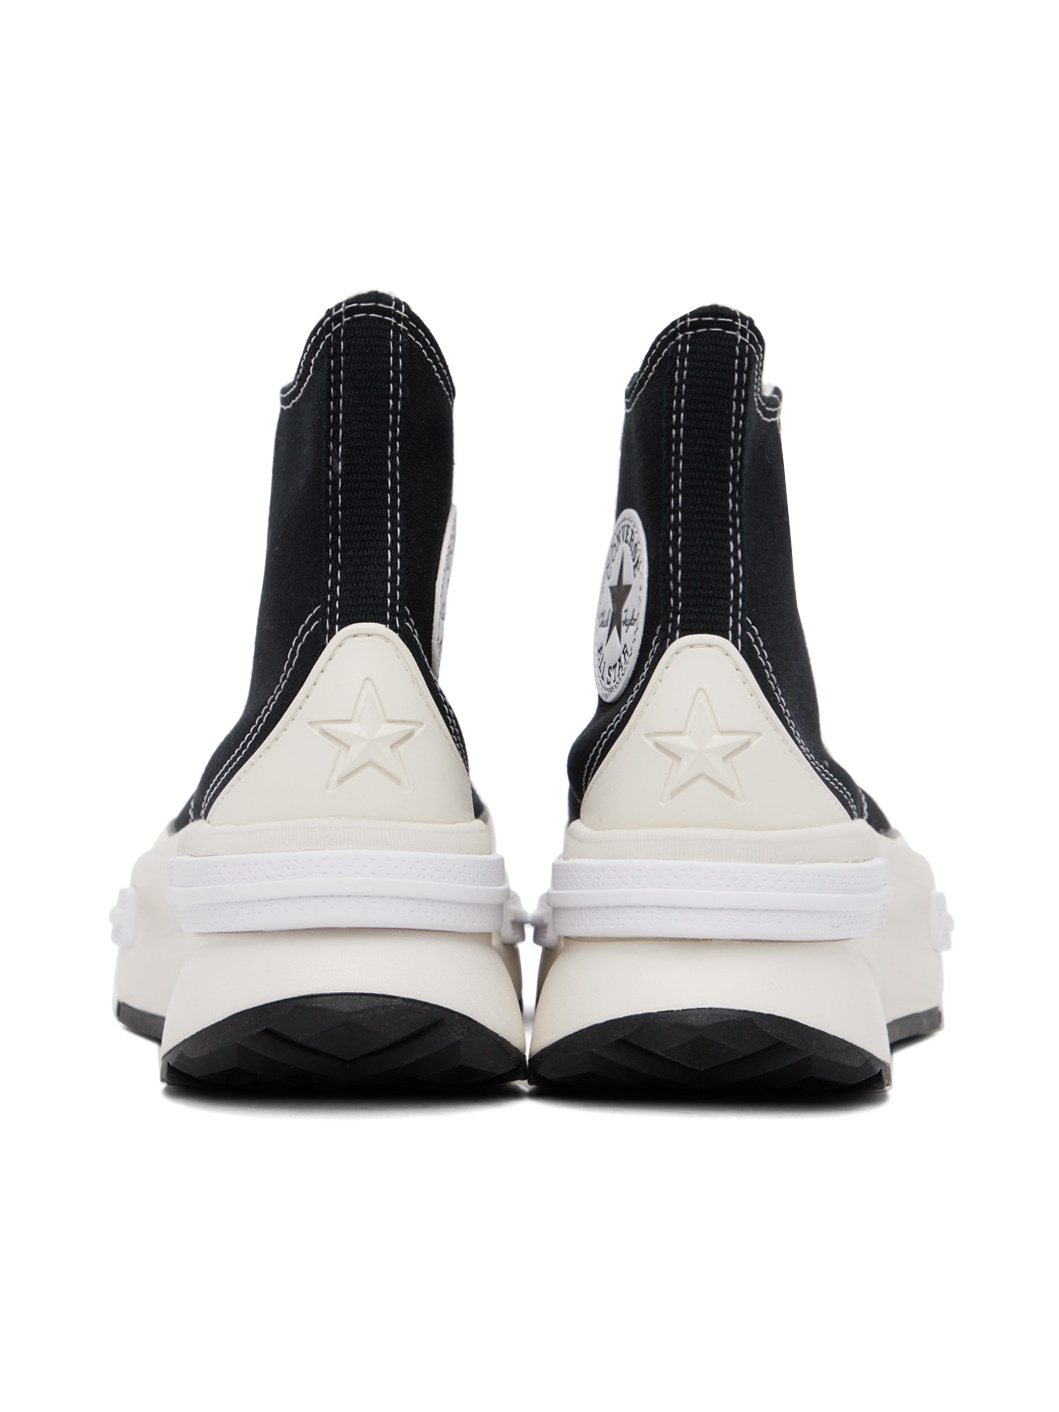 Black Run Star Legacy CX Sneakers - 2